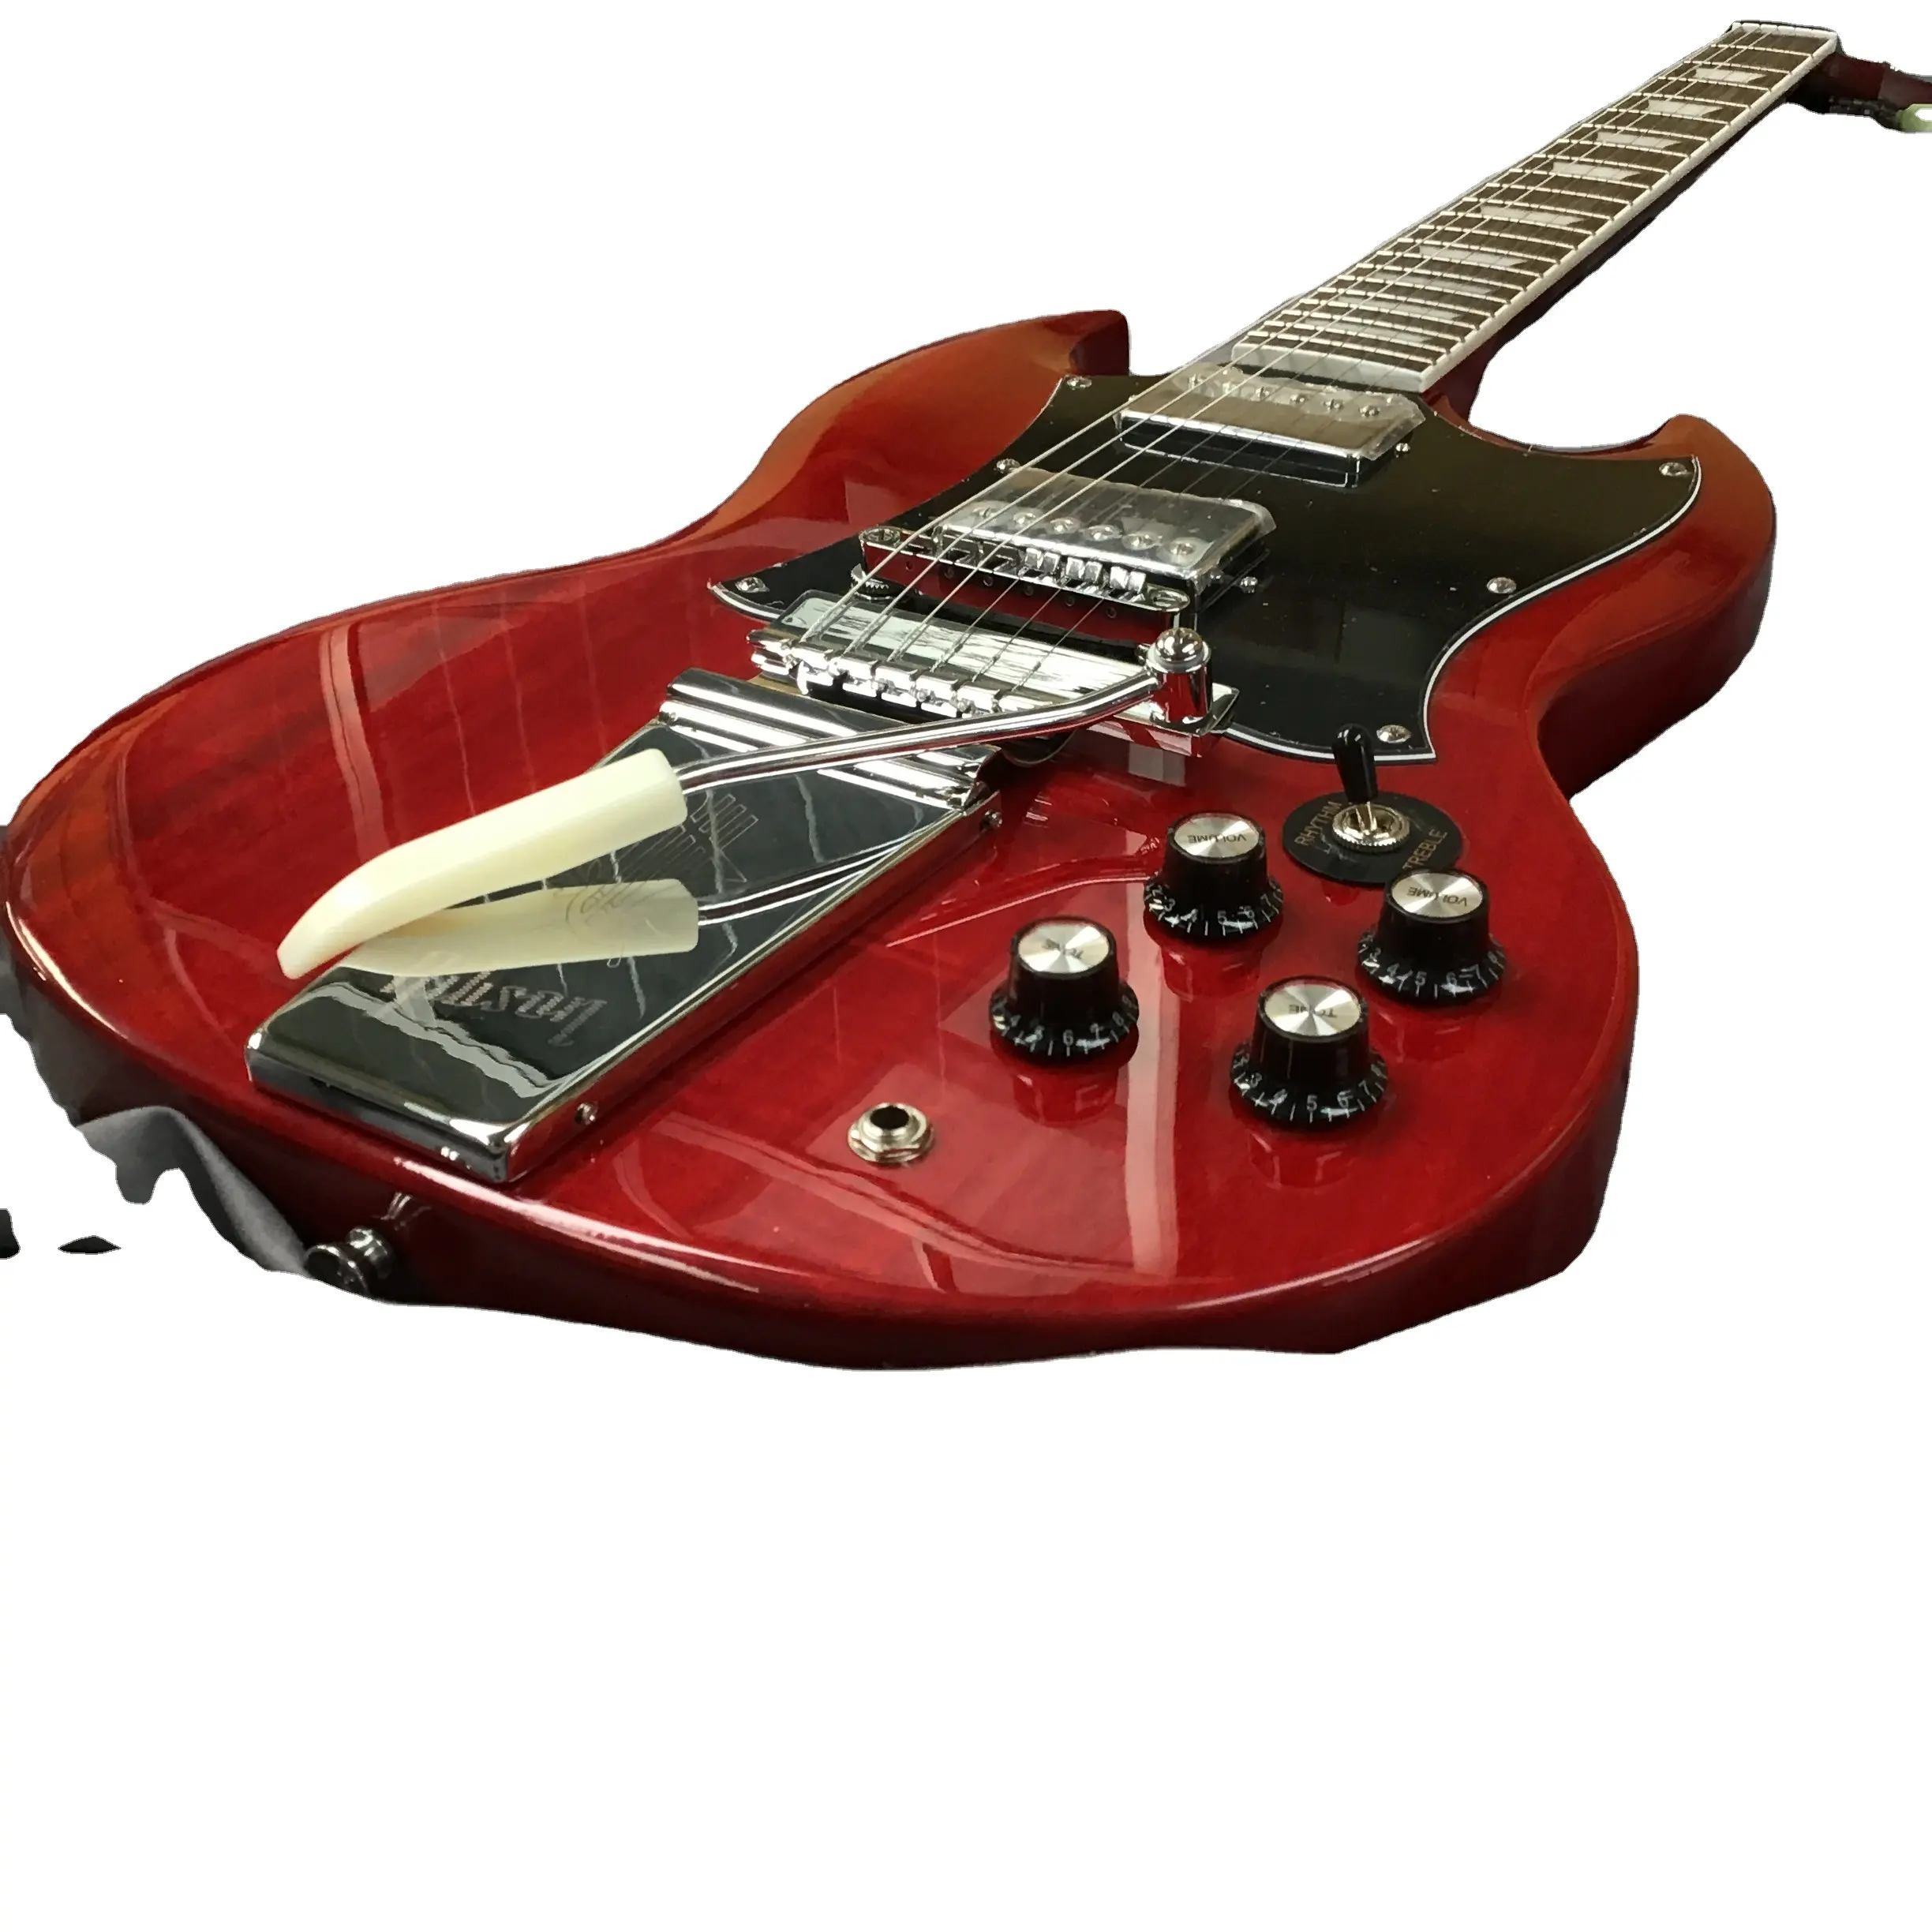 Guitarra elétrica vermelha 6 cordas HH Pickup FAST Shipping G marca guitarra com barra